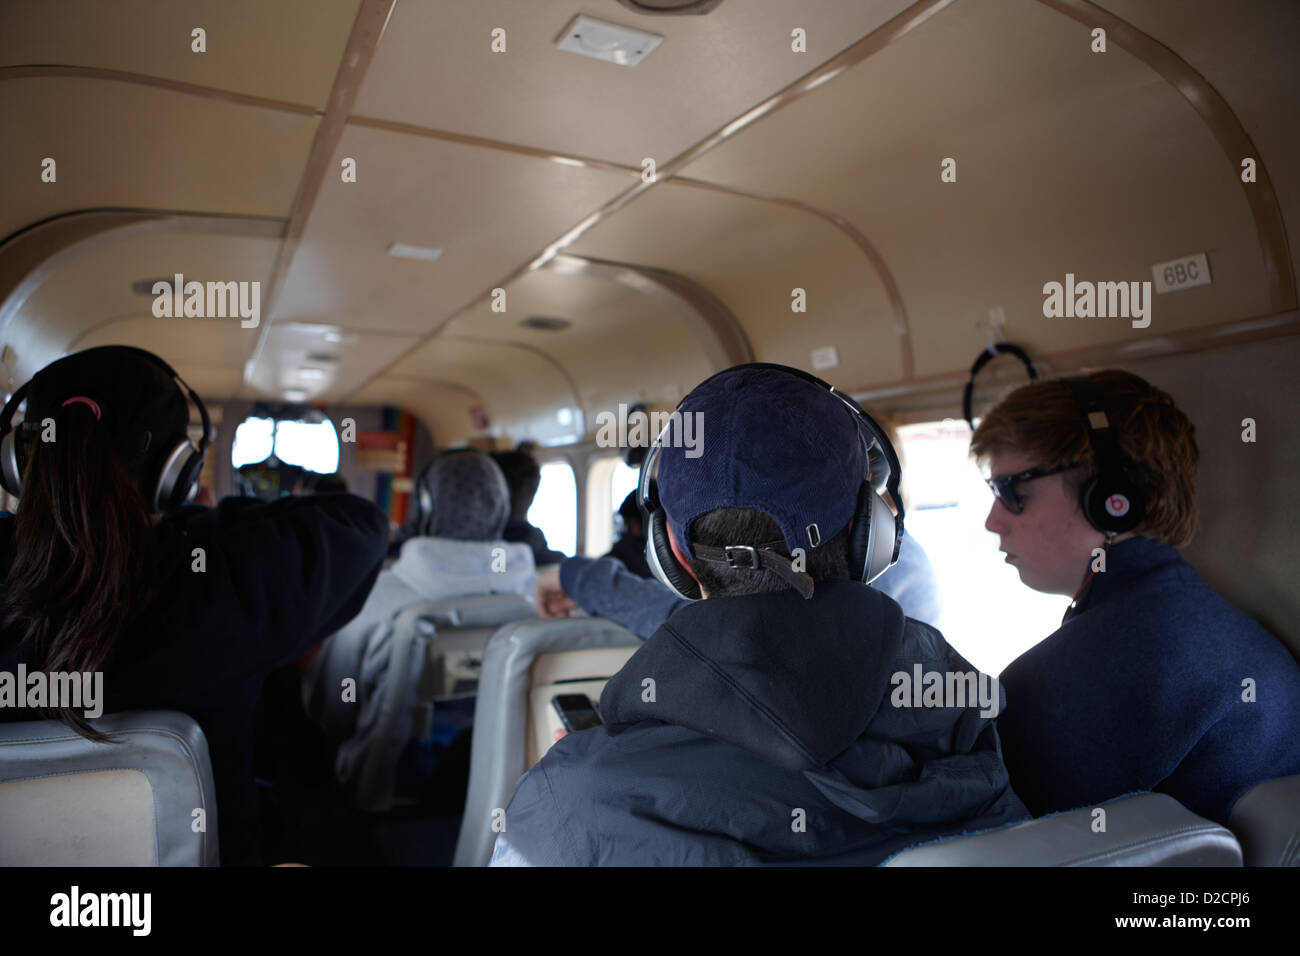 passengers on board dehaviland twin otter light aircraft sightseeing flight to grand canyon Stock Photo